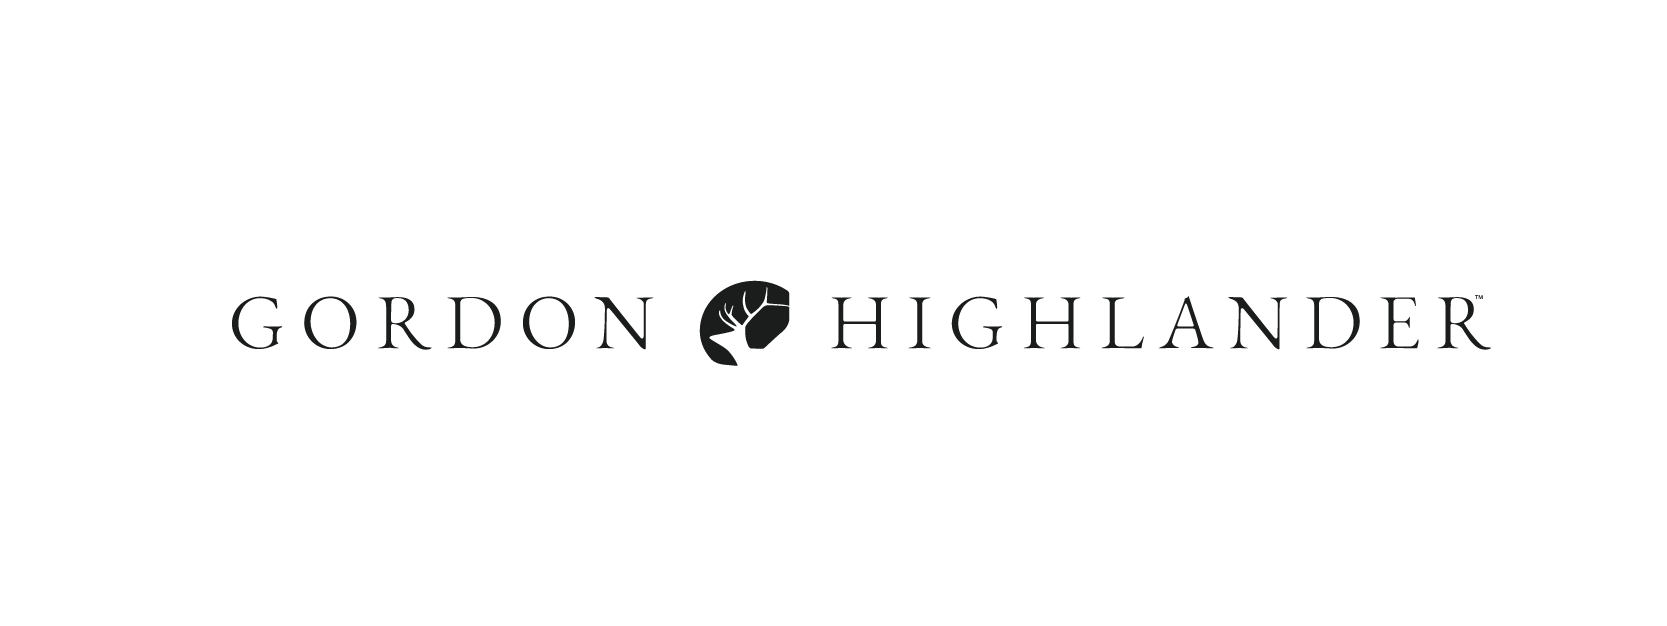 Gordon Highlander Corporation logo